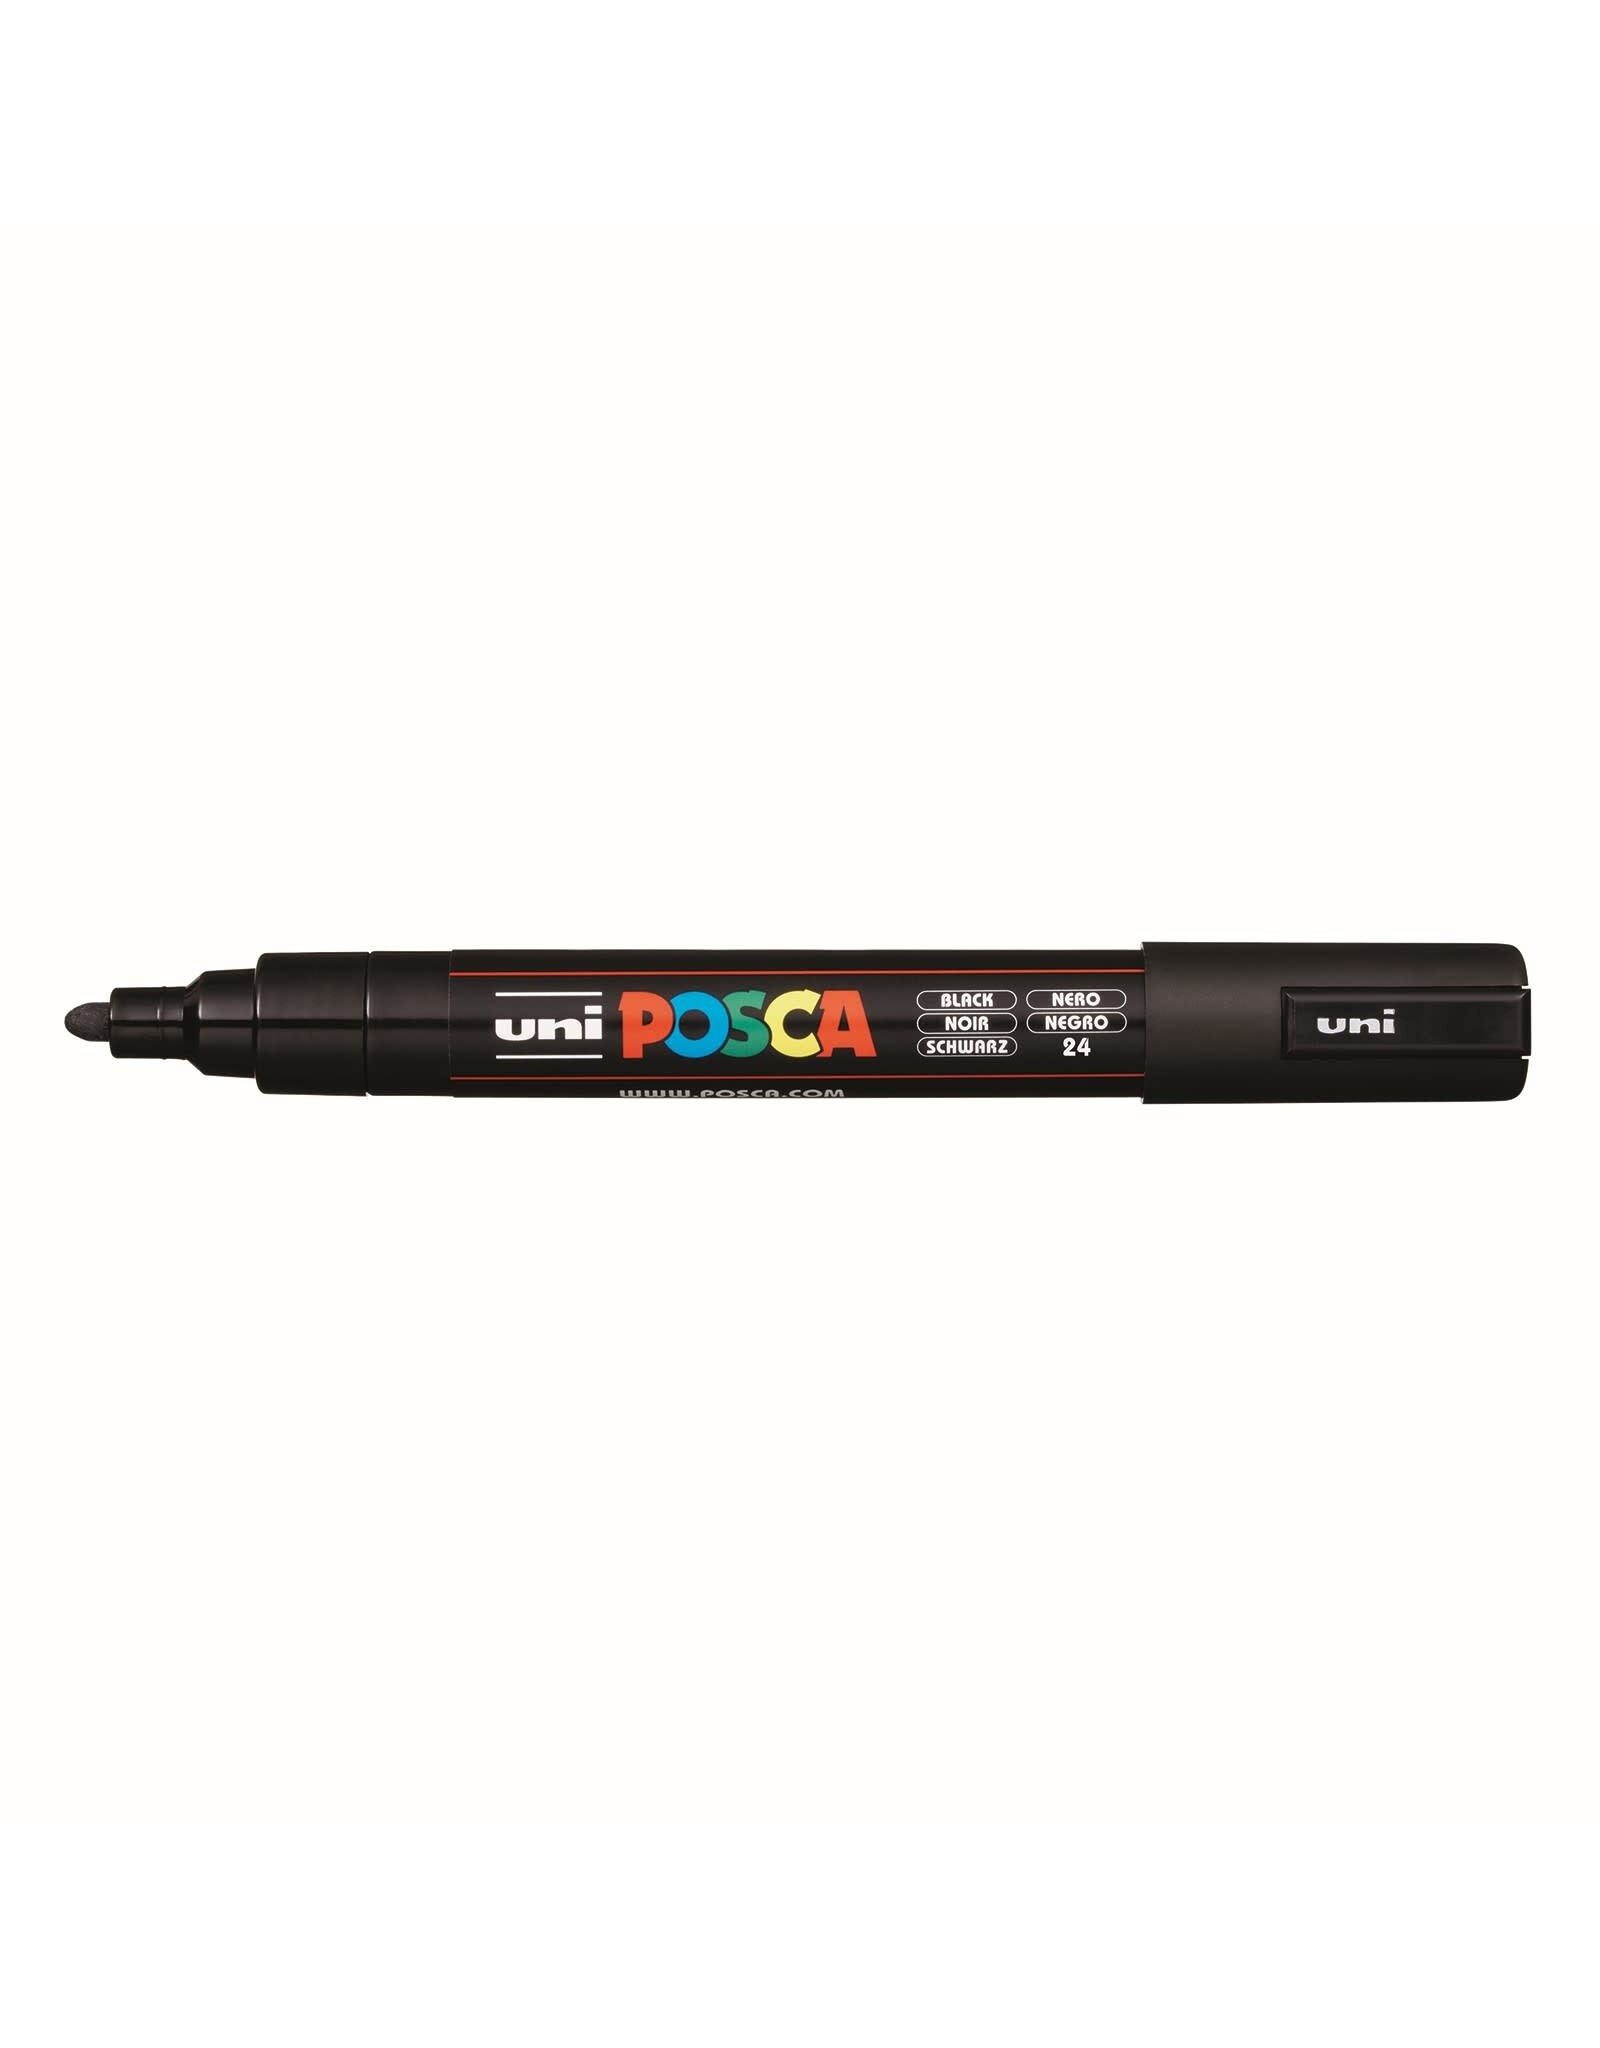 POSCA Uni POSCA Paint Marker, Medium, Black